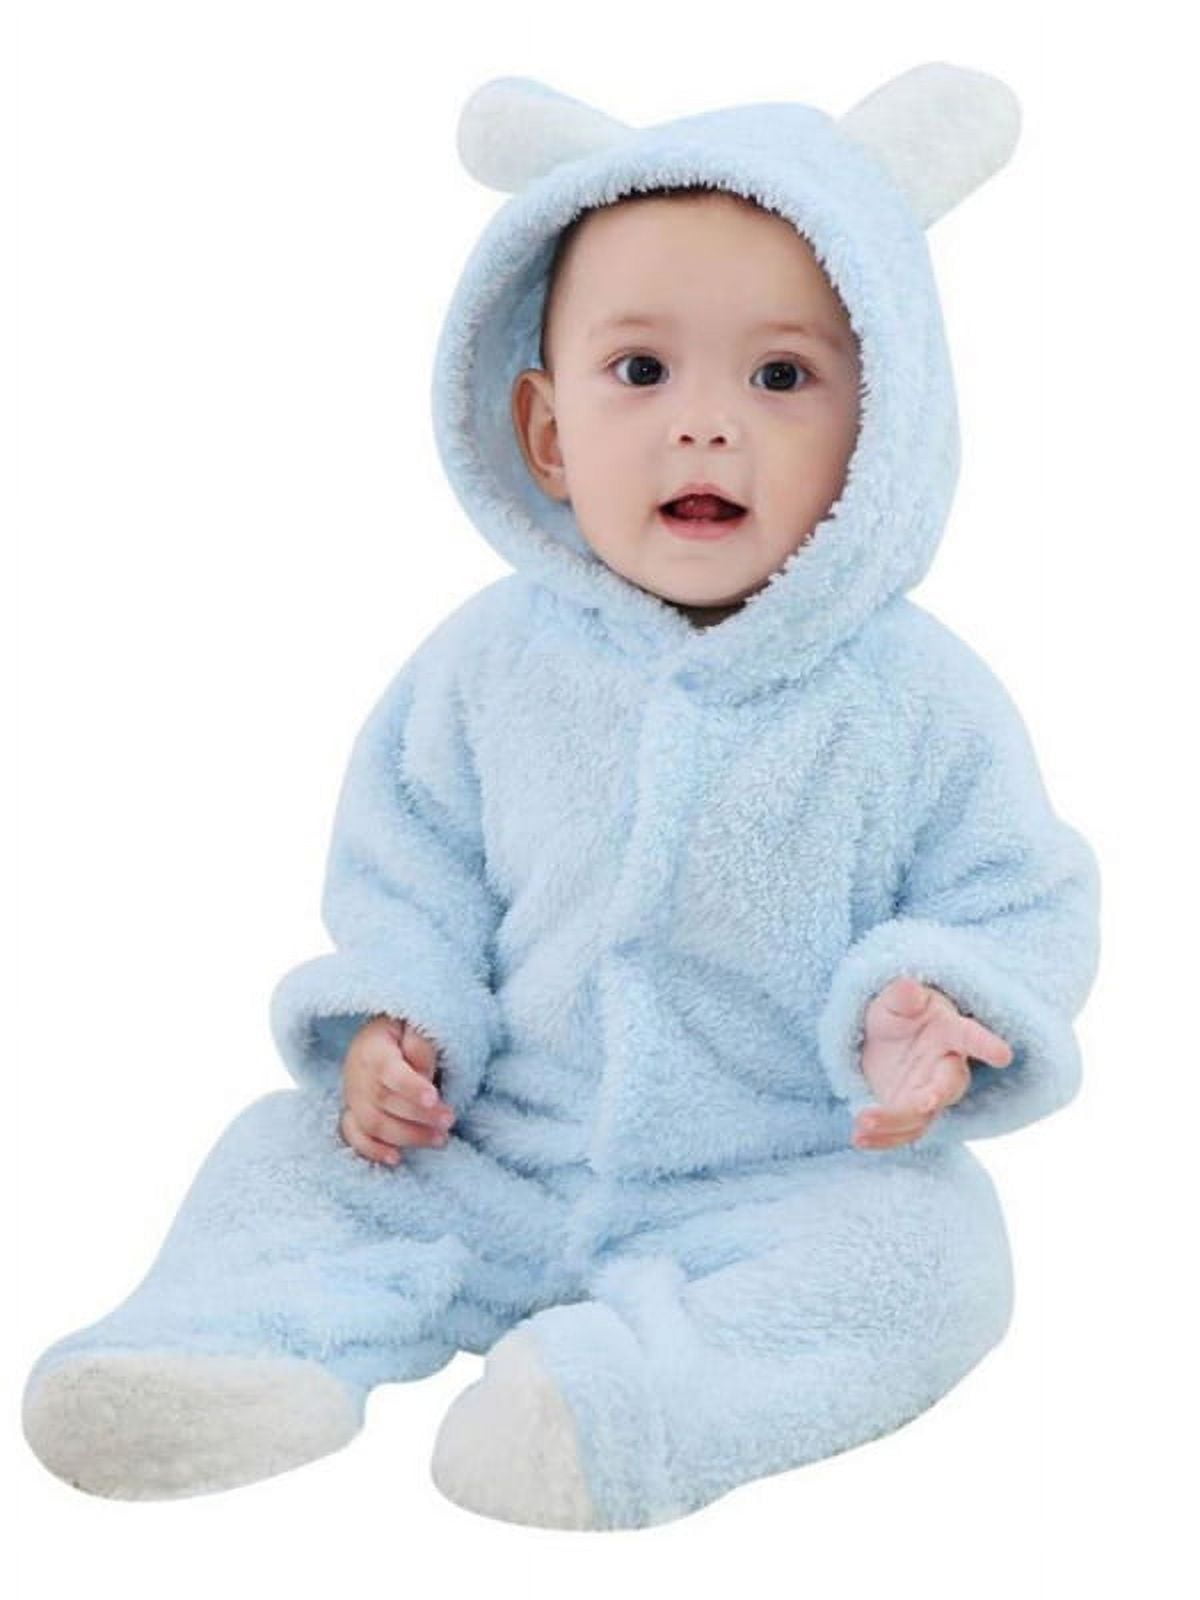 Buy Best Baby Newborn/Infant Winter Warm Romper For age 0-24 Months